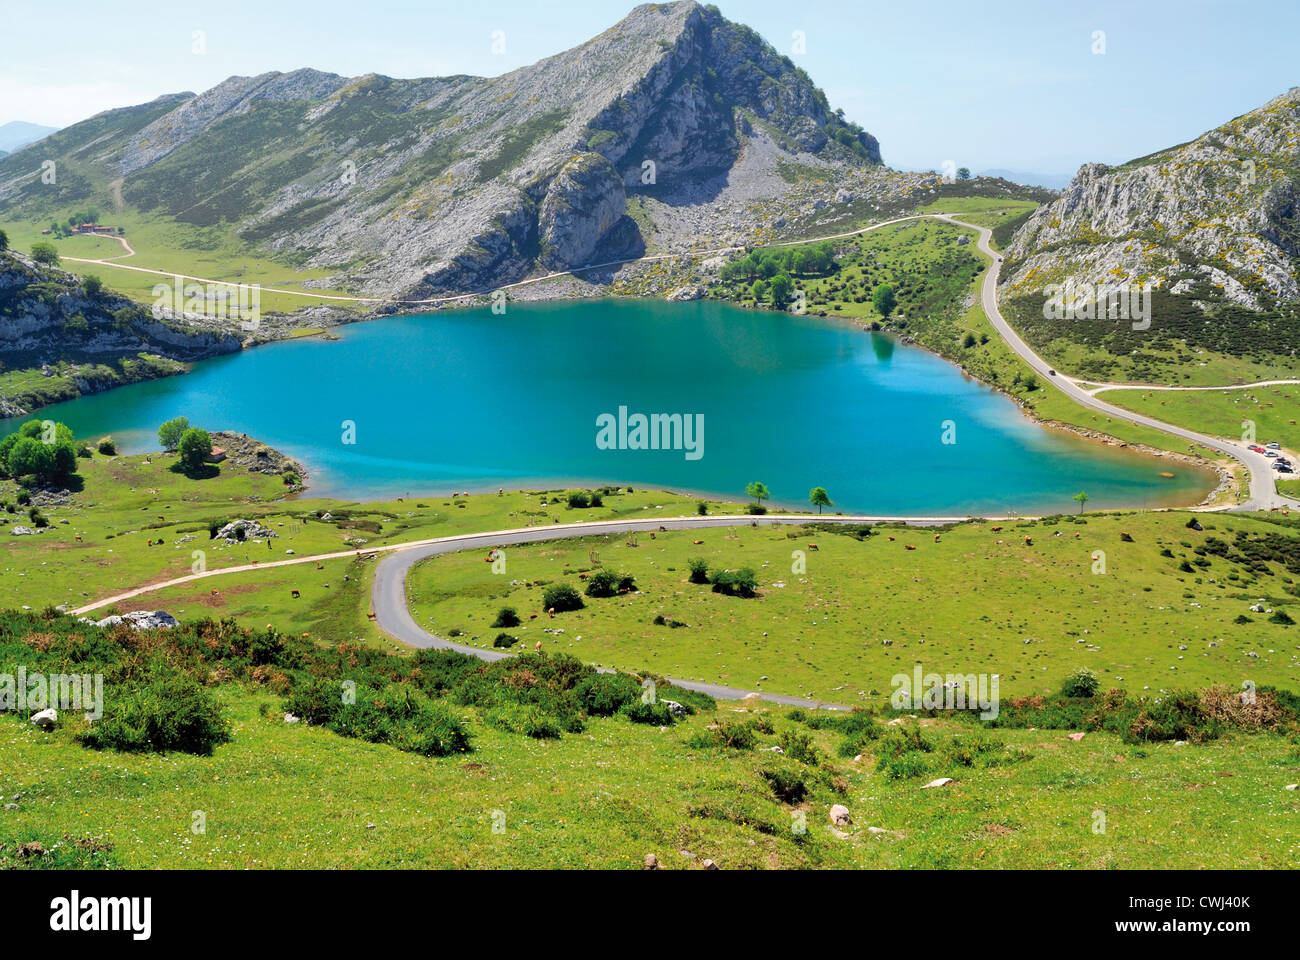 Spagna Asturie: Lago Enol in Nationalpark Picos de Europa Foto Stock